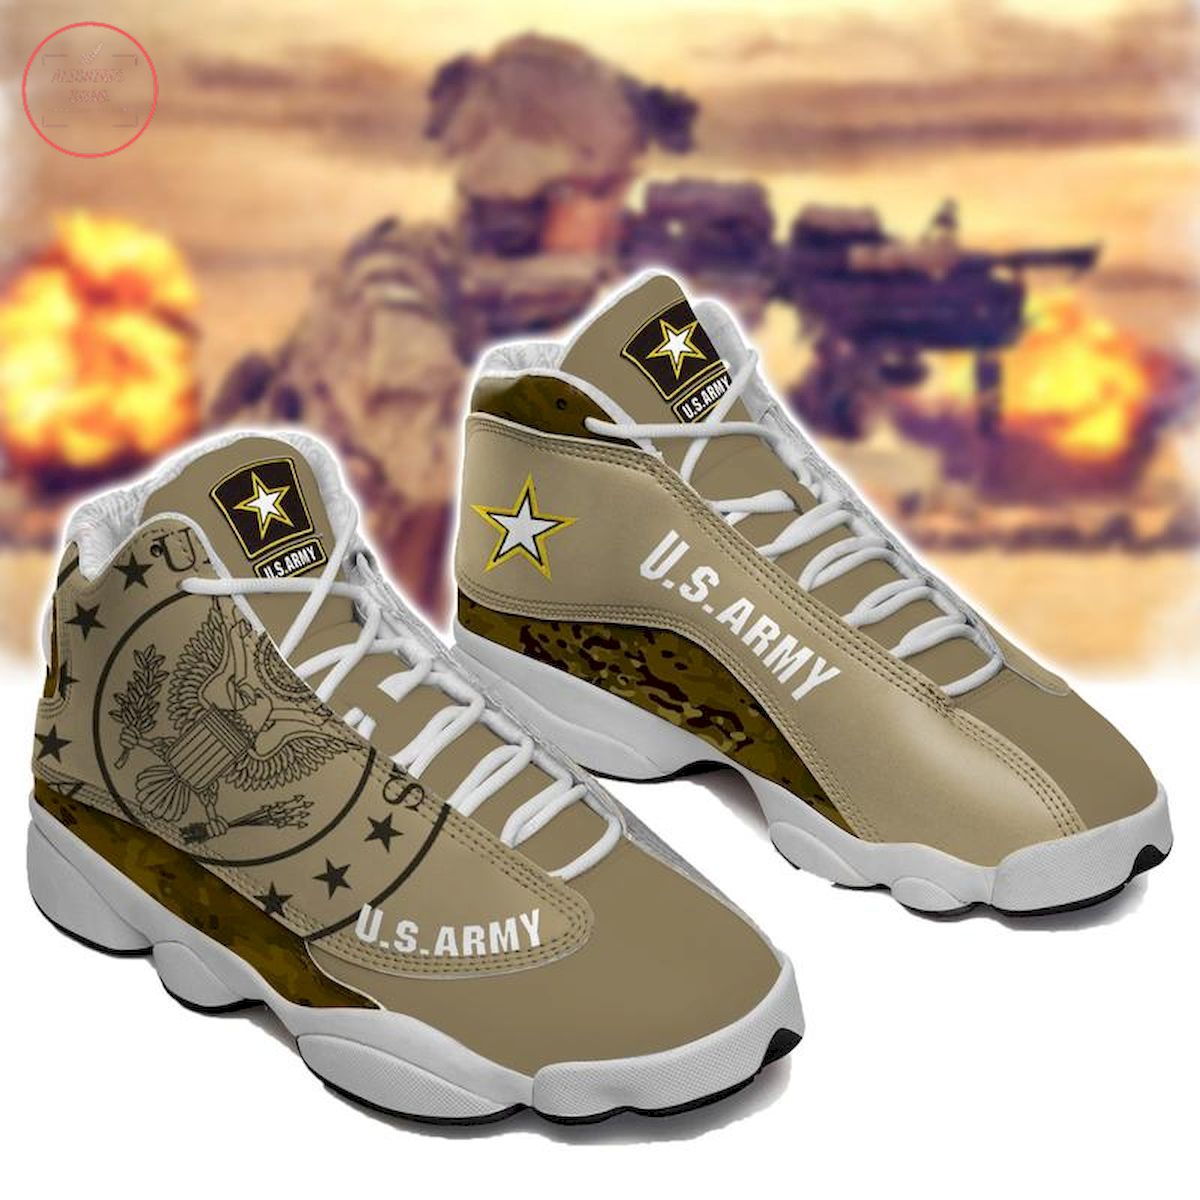 US Army Air Jordan 13 Sneaker Shoes